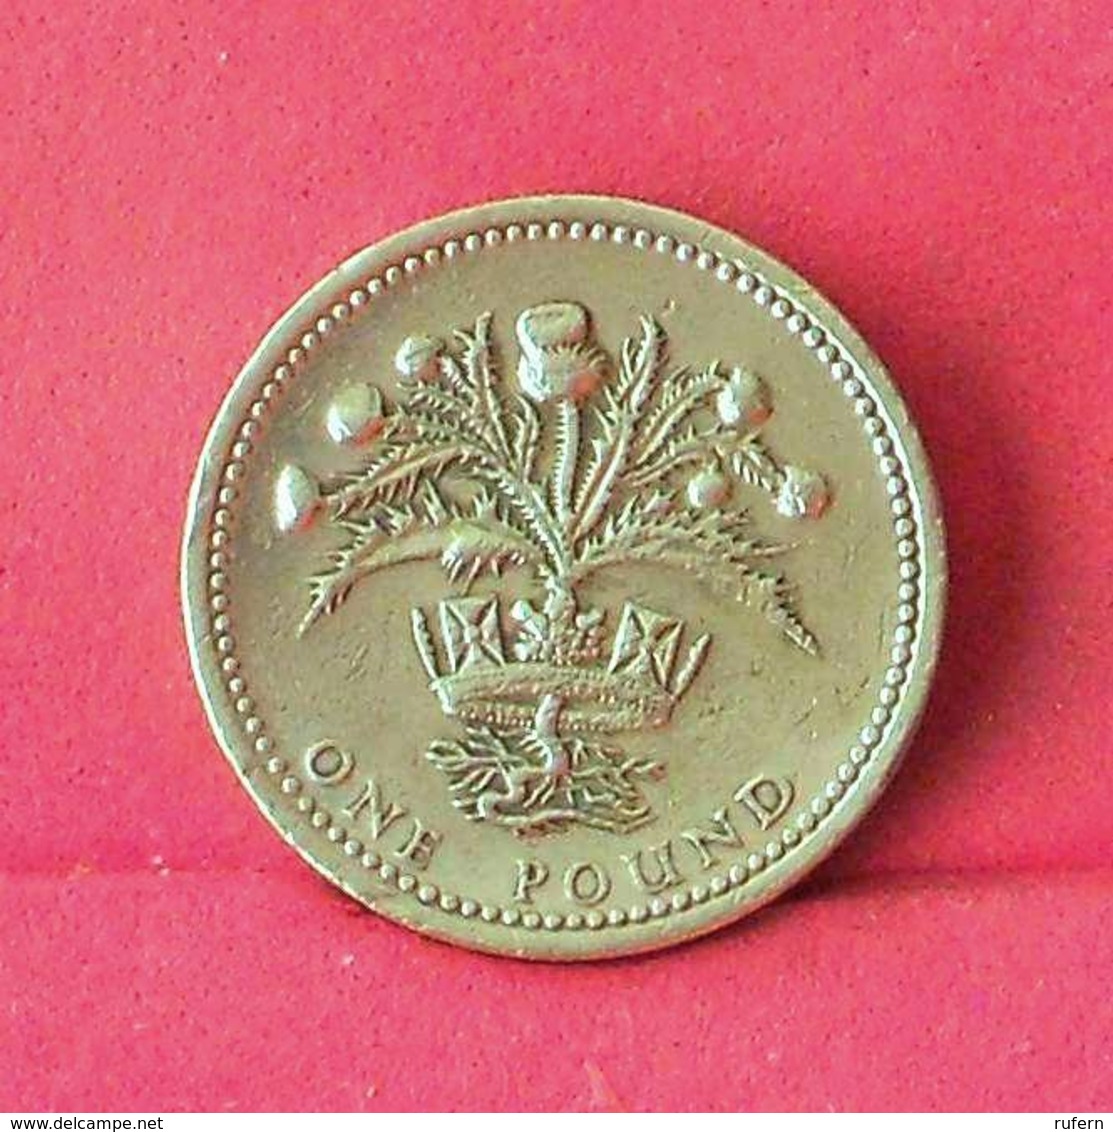 GREAT BRITAIN 1 POUND 1984 -    KM# 934 - (Nº27550) - 1 Pound